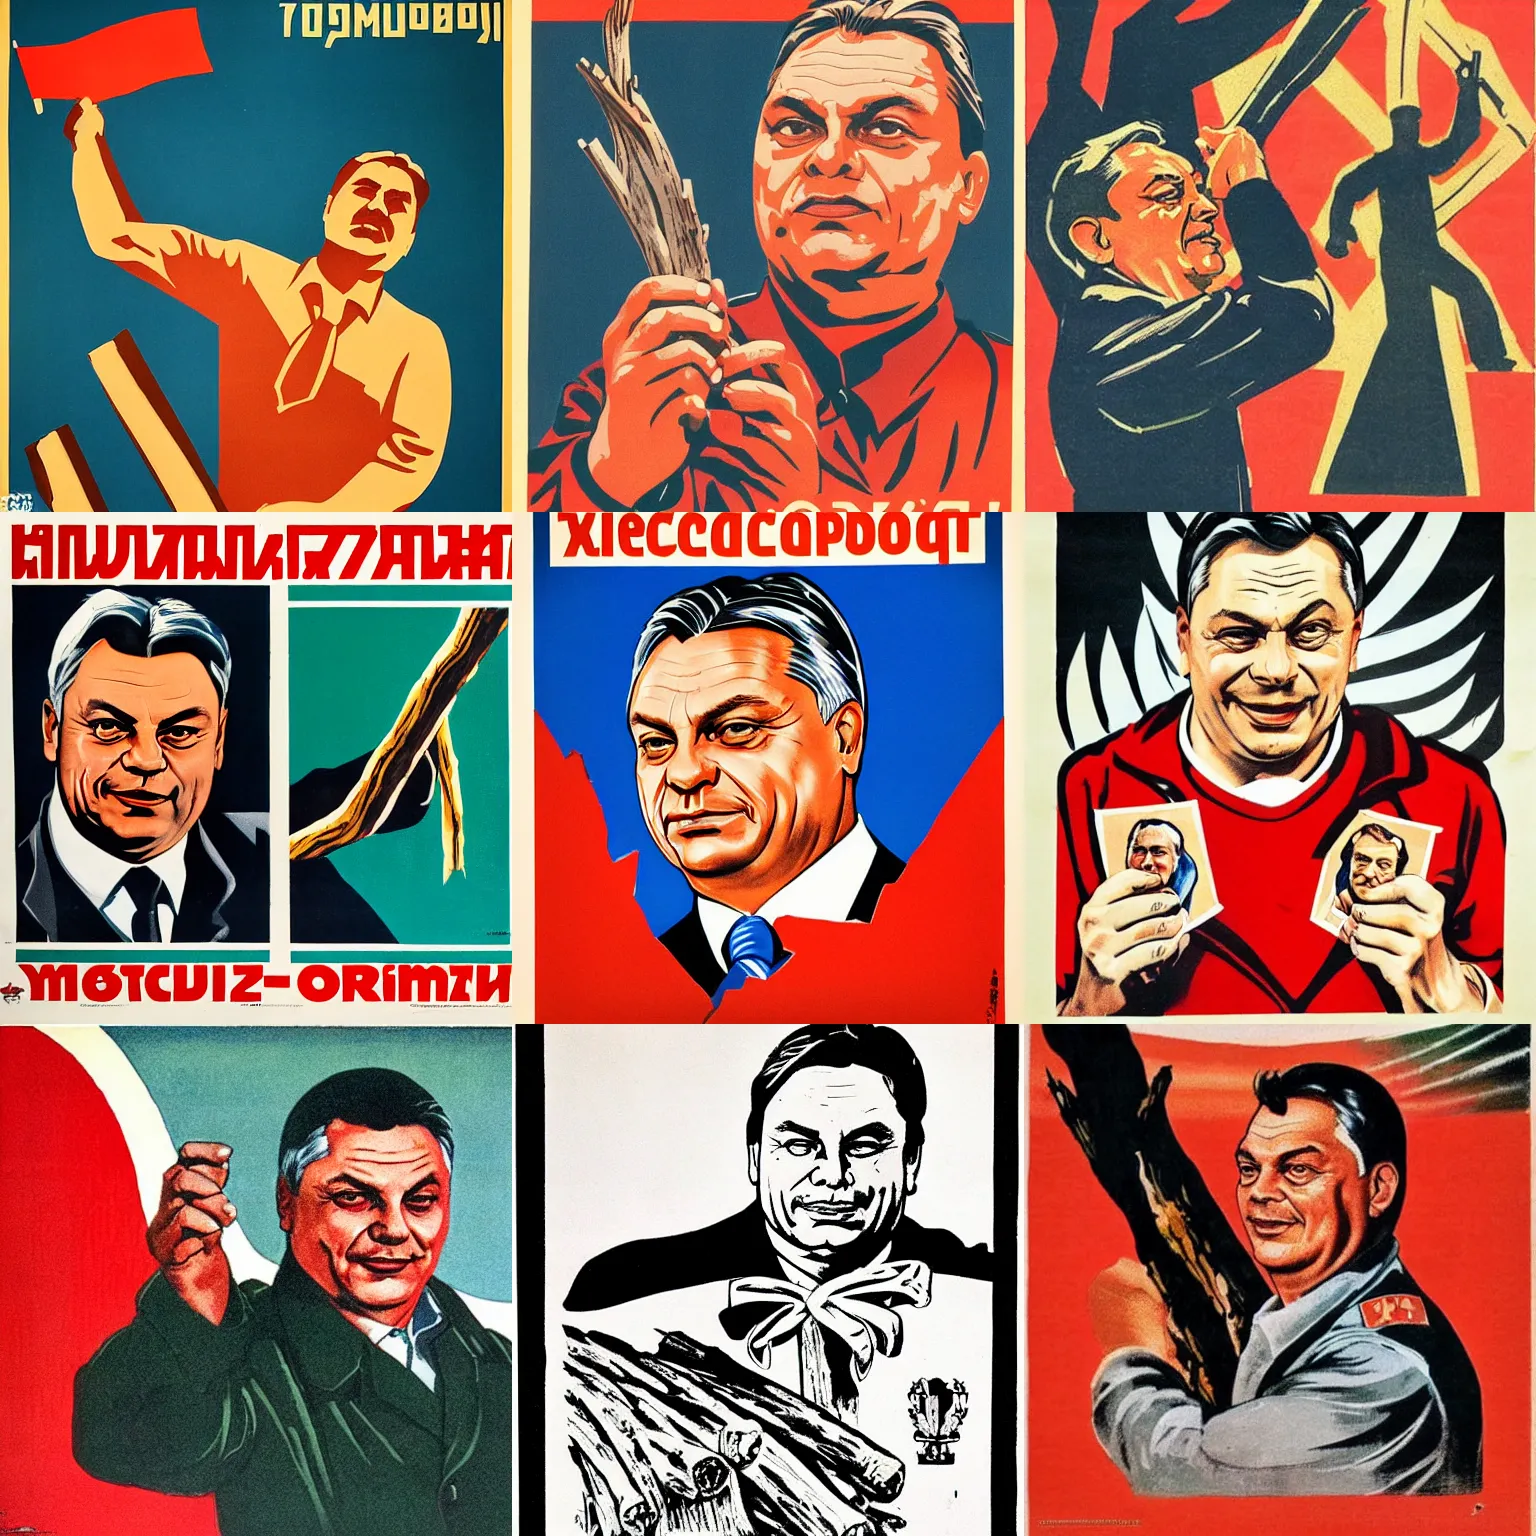 Prompt: soviet propaganda poster of viktor orban with firewood